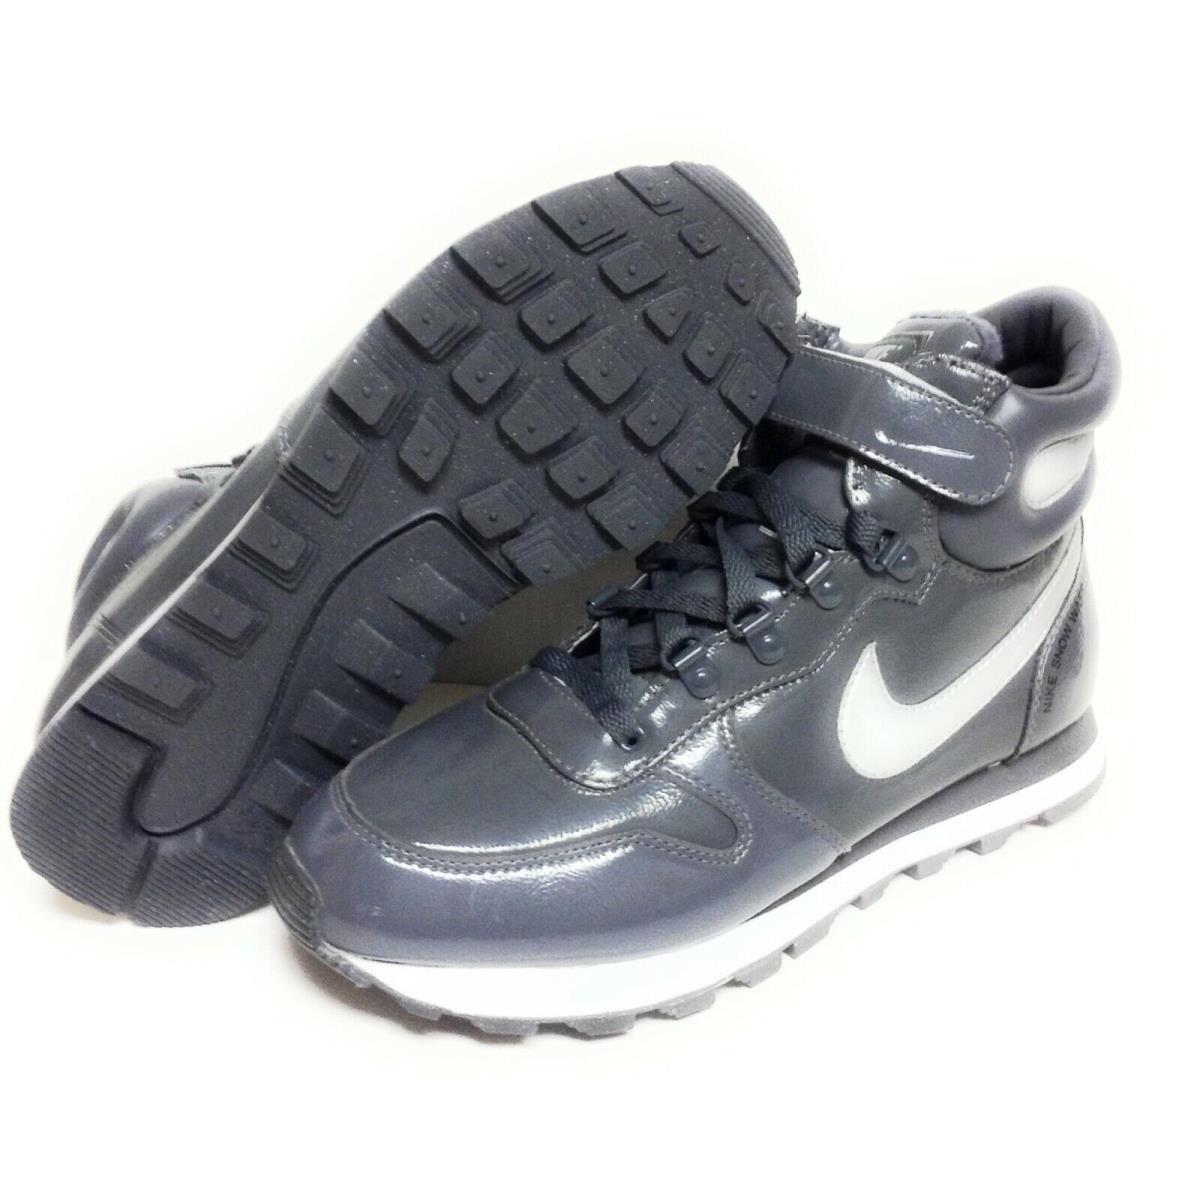 Womens Nike Snow Waffle CL 371758 002 Dark Grey 2009 Deadstock Sneakers Shoes - Grey